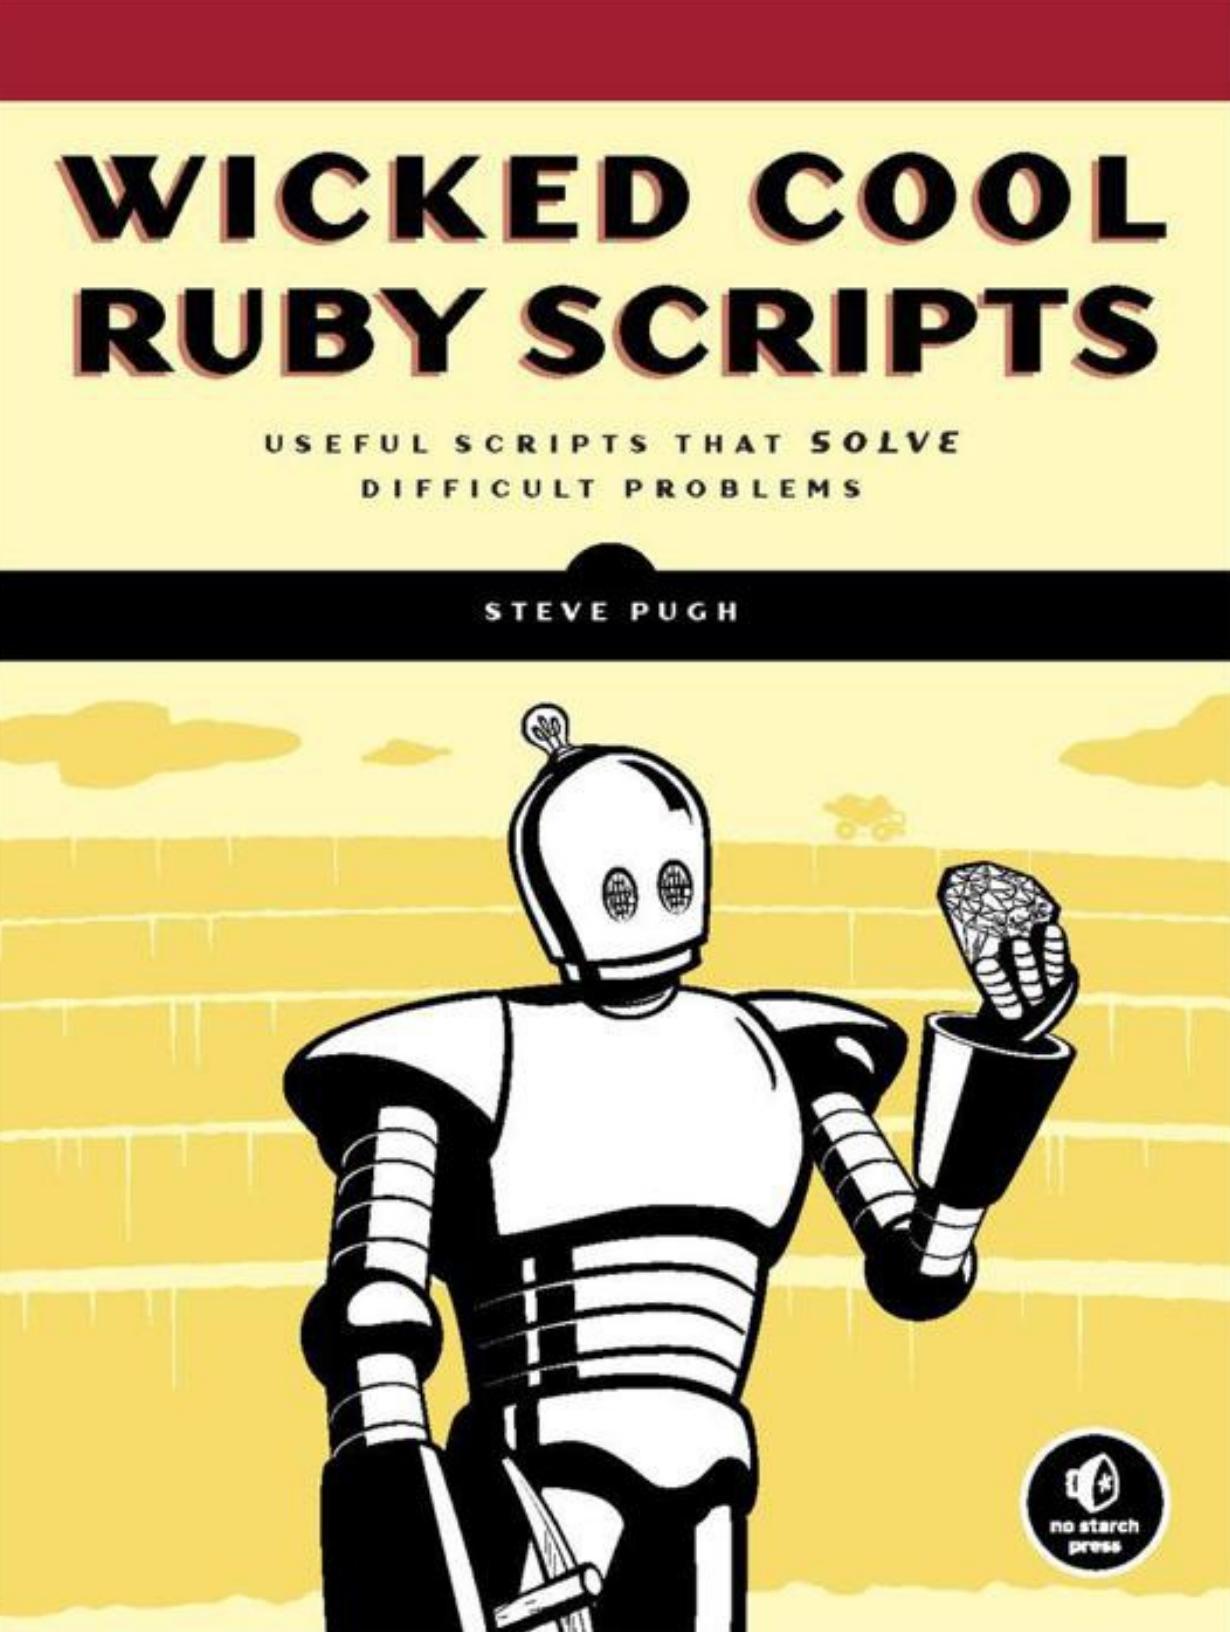 Wicked Cool Ruby Scripts by Steve Pugh